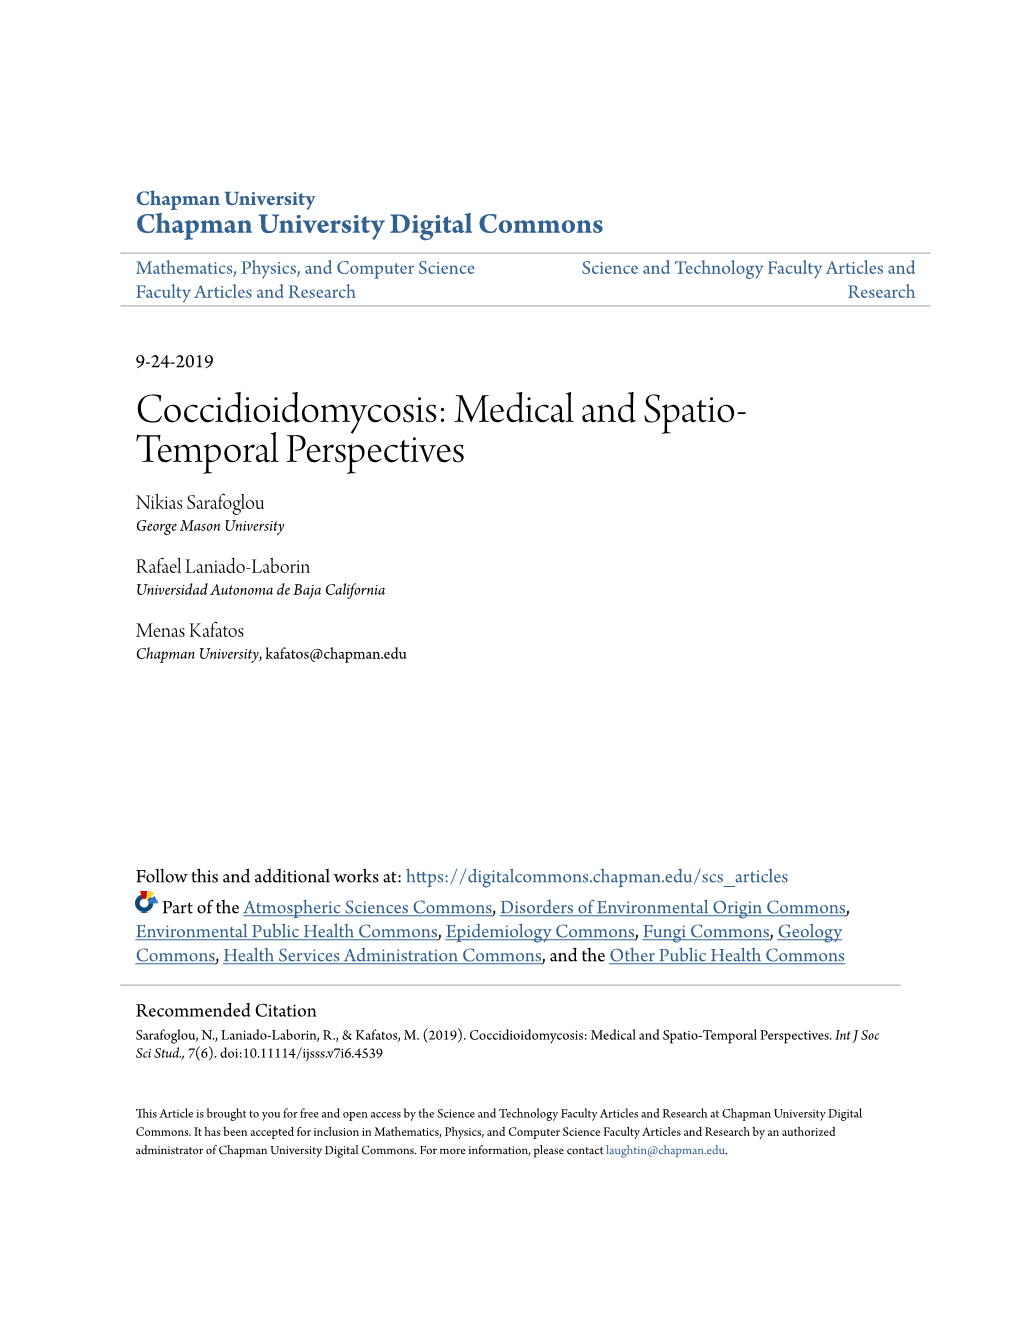 Coccidioidomycosis: Medical and Spatio- Temporal Perspectives Nikias Sarafoglou George Mason University